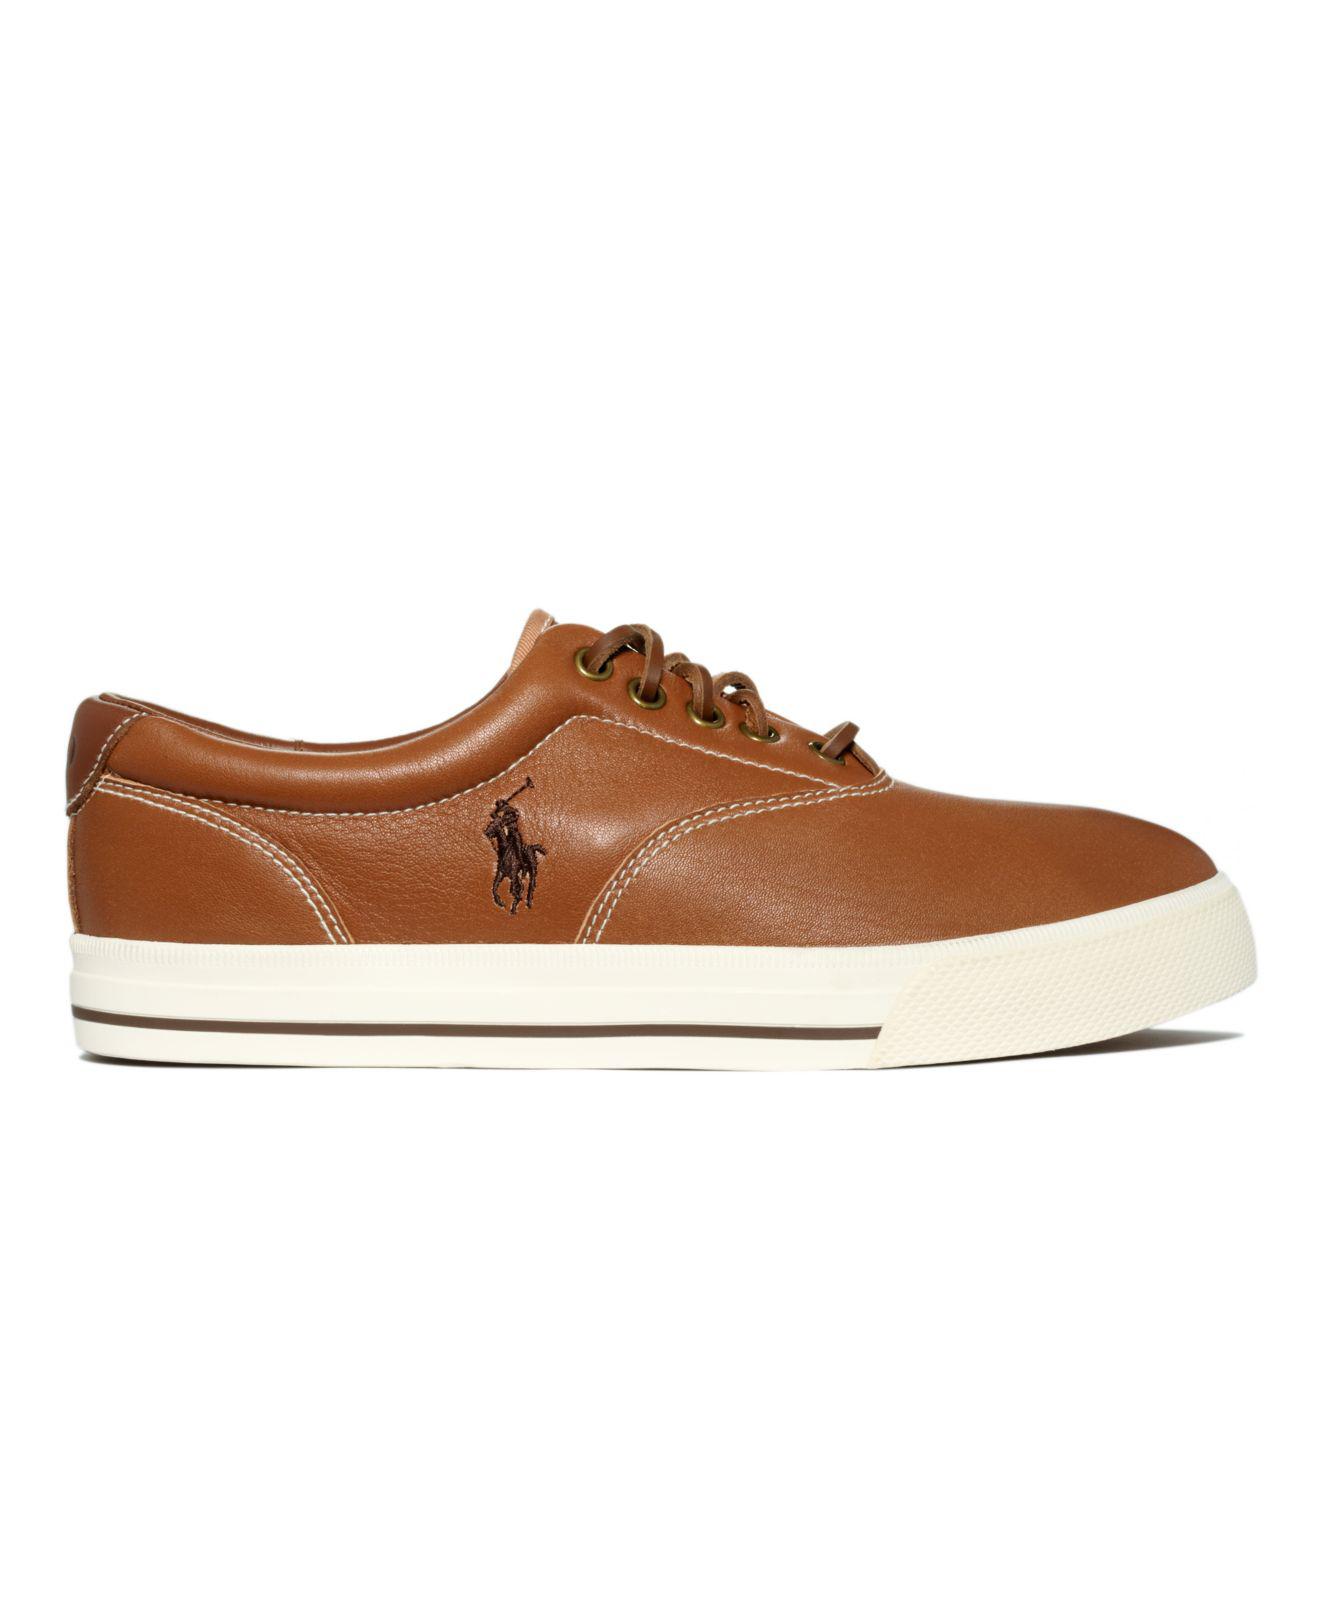 Polo Ralph Lauren Vaughn Leather Sneakers in Tan (Brown) for Men - Lyst